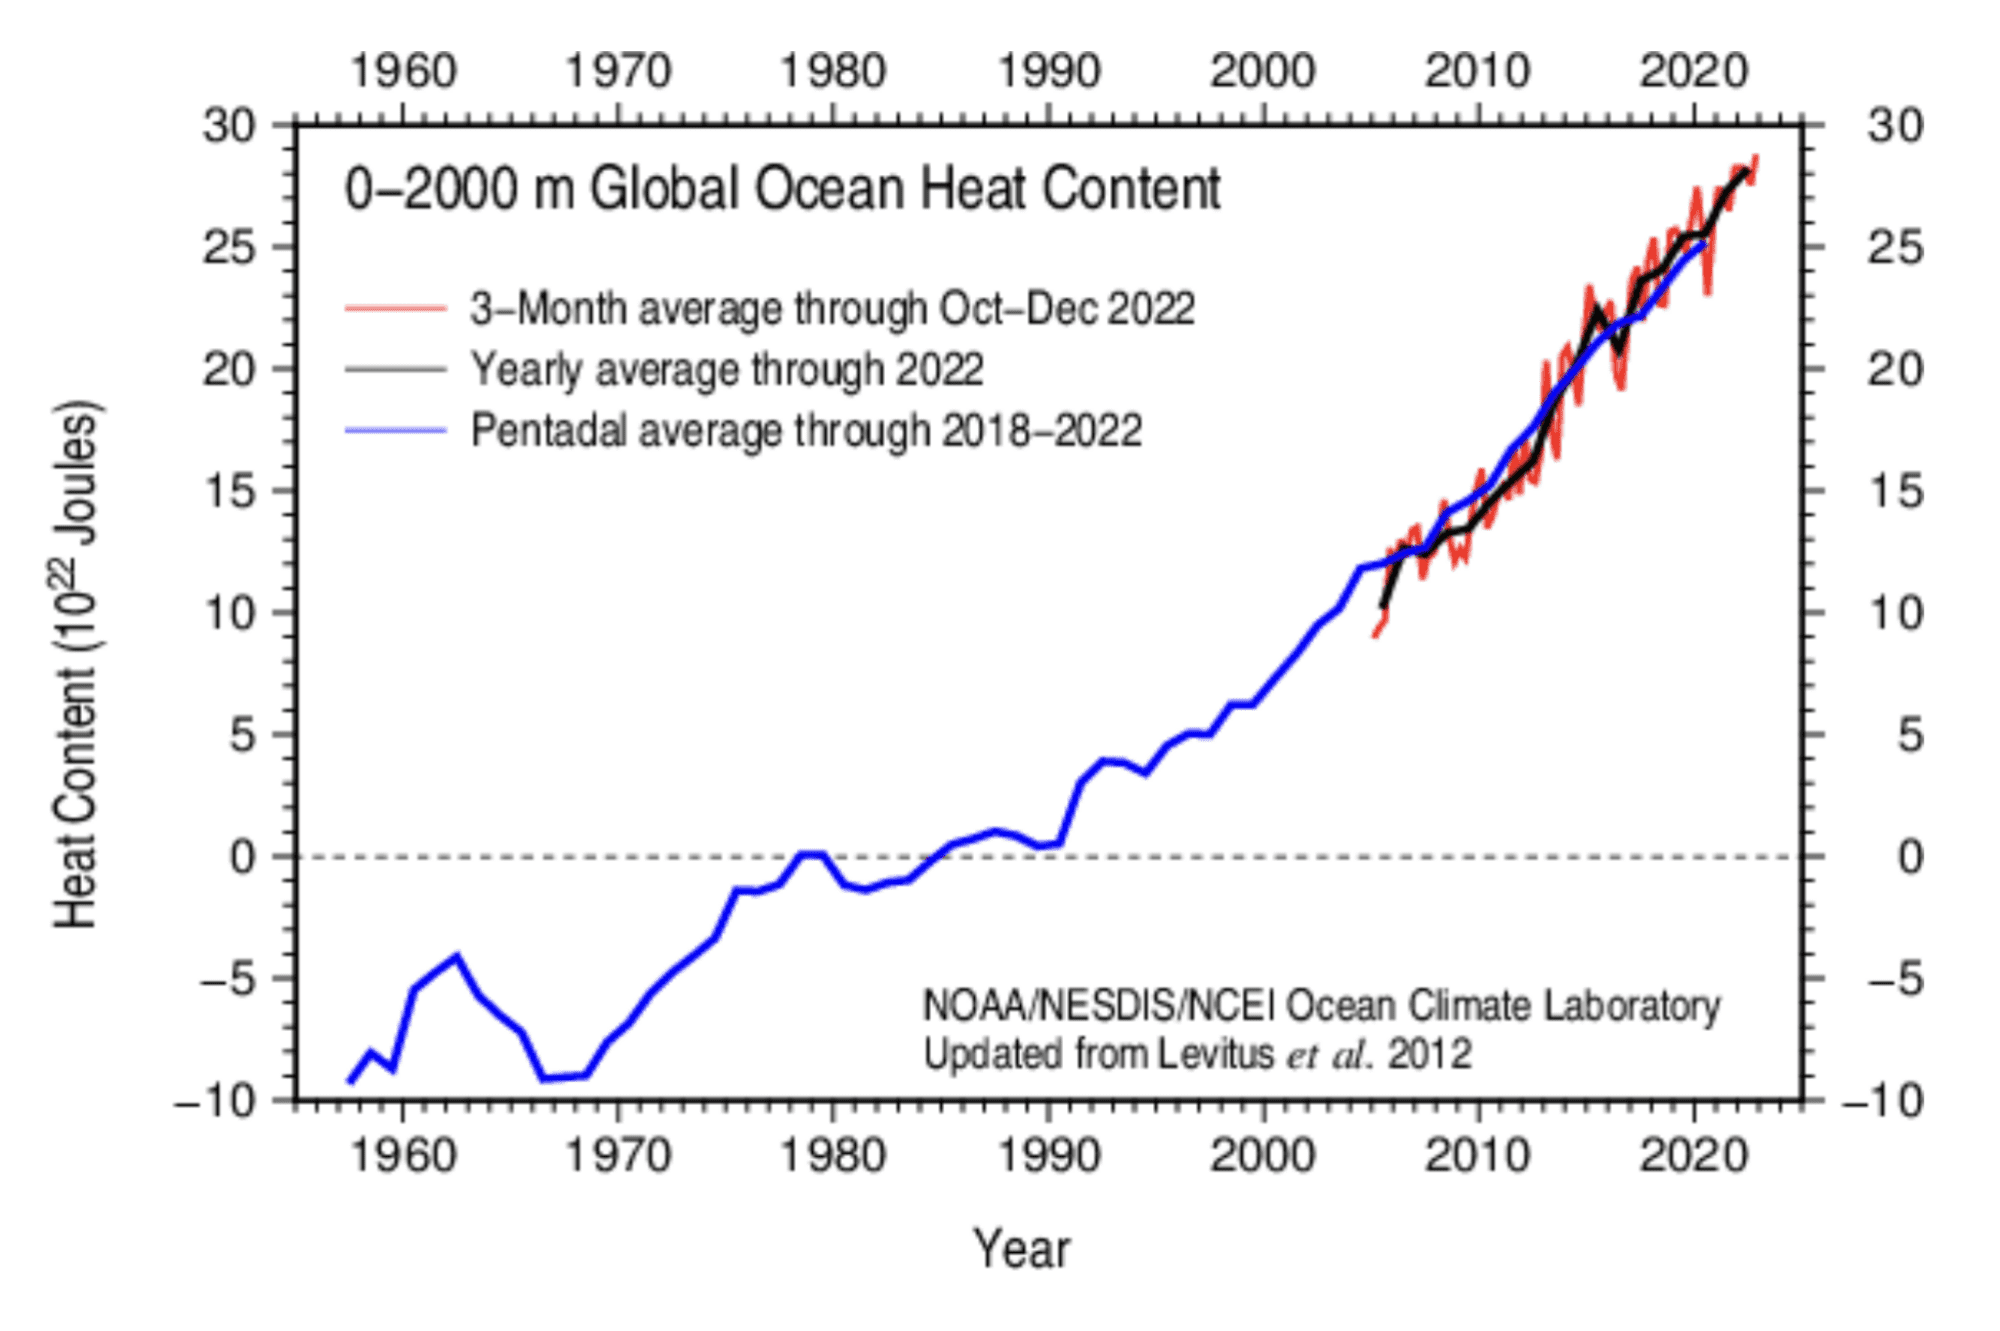 Ocean heat content has been rising for decades. 